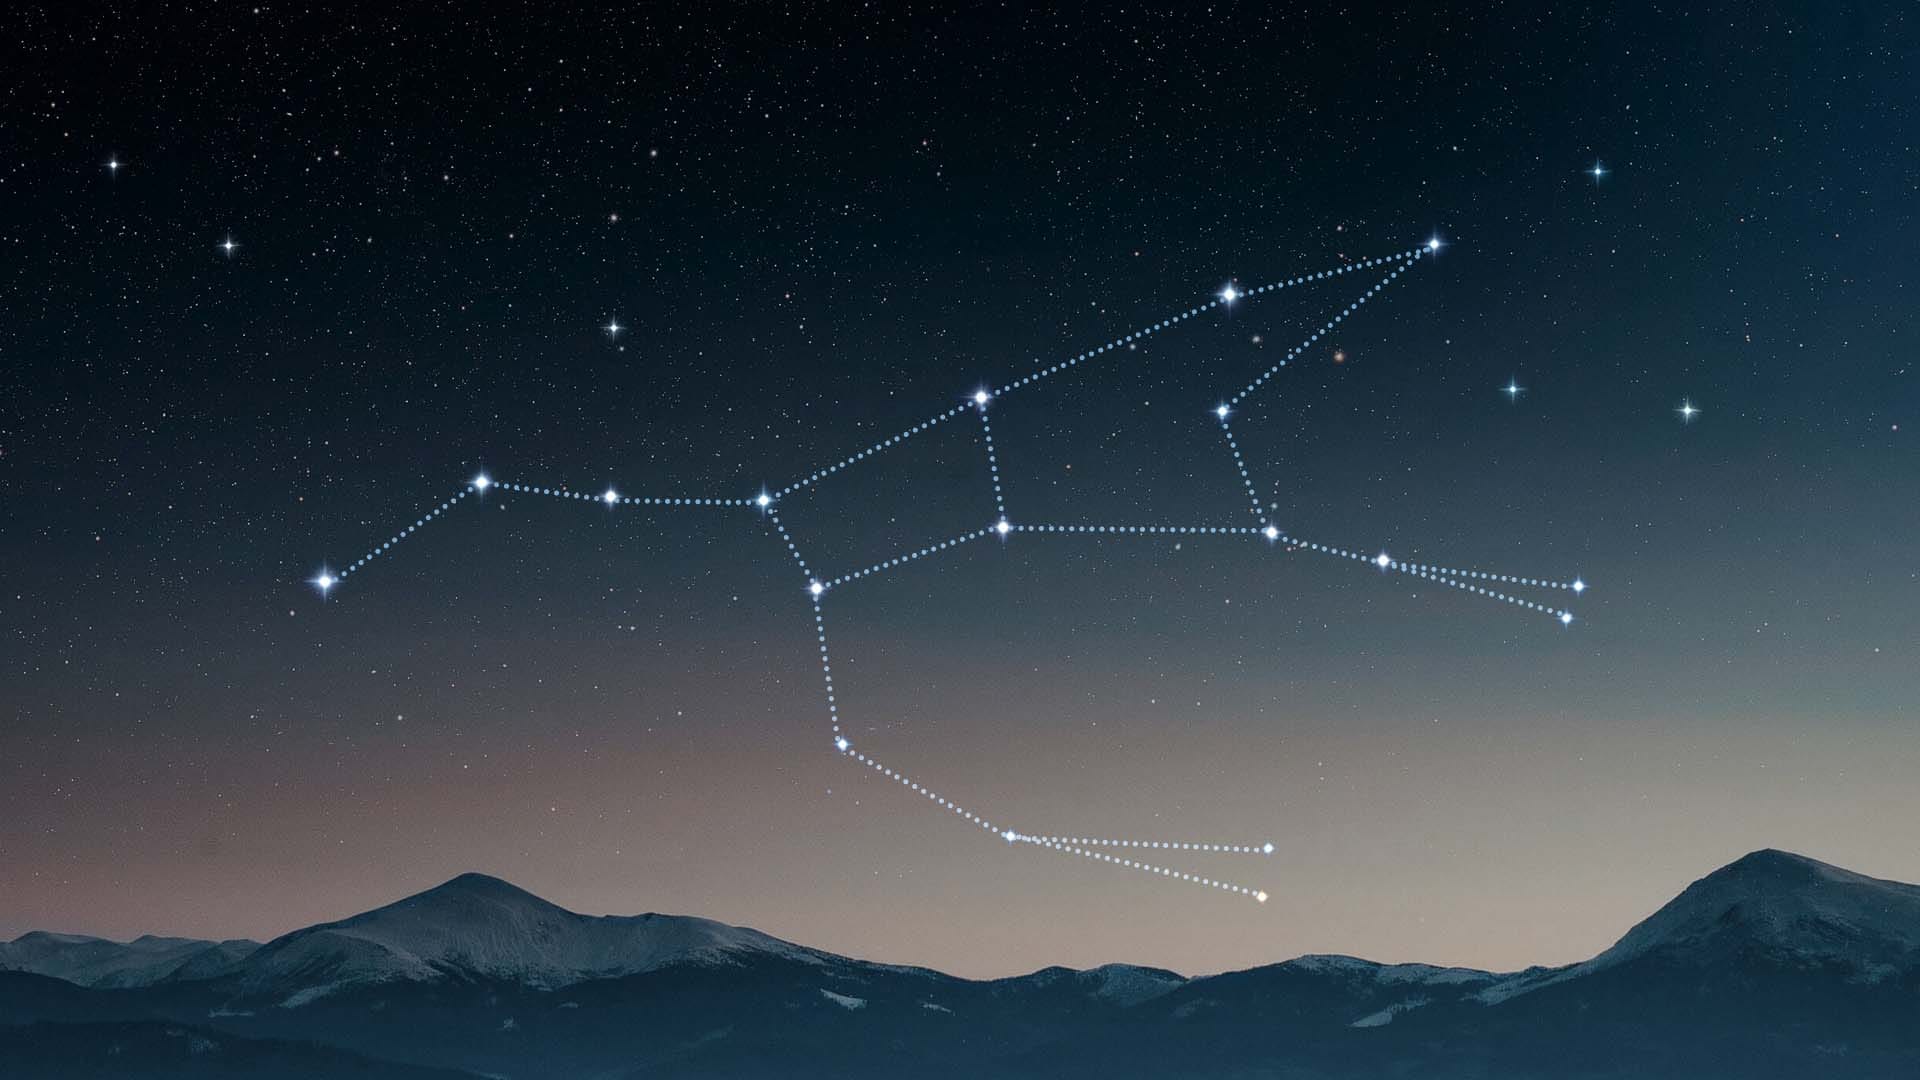 The Great Bear Constellation — Ursa Major